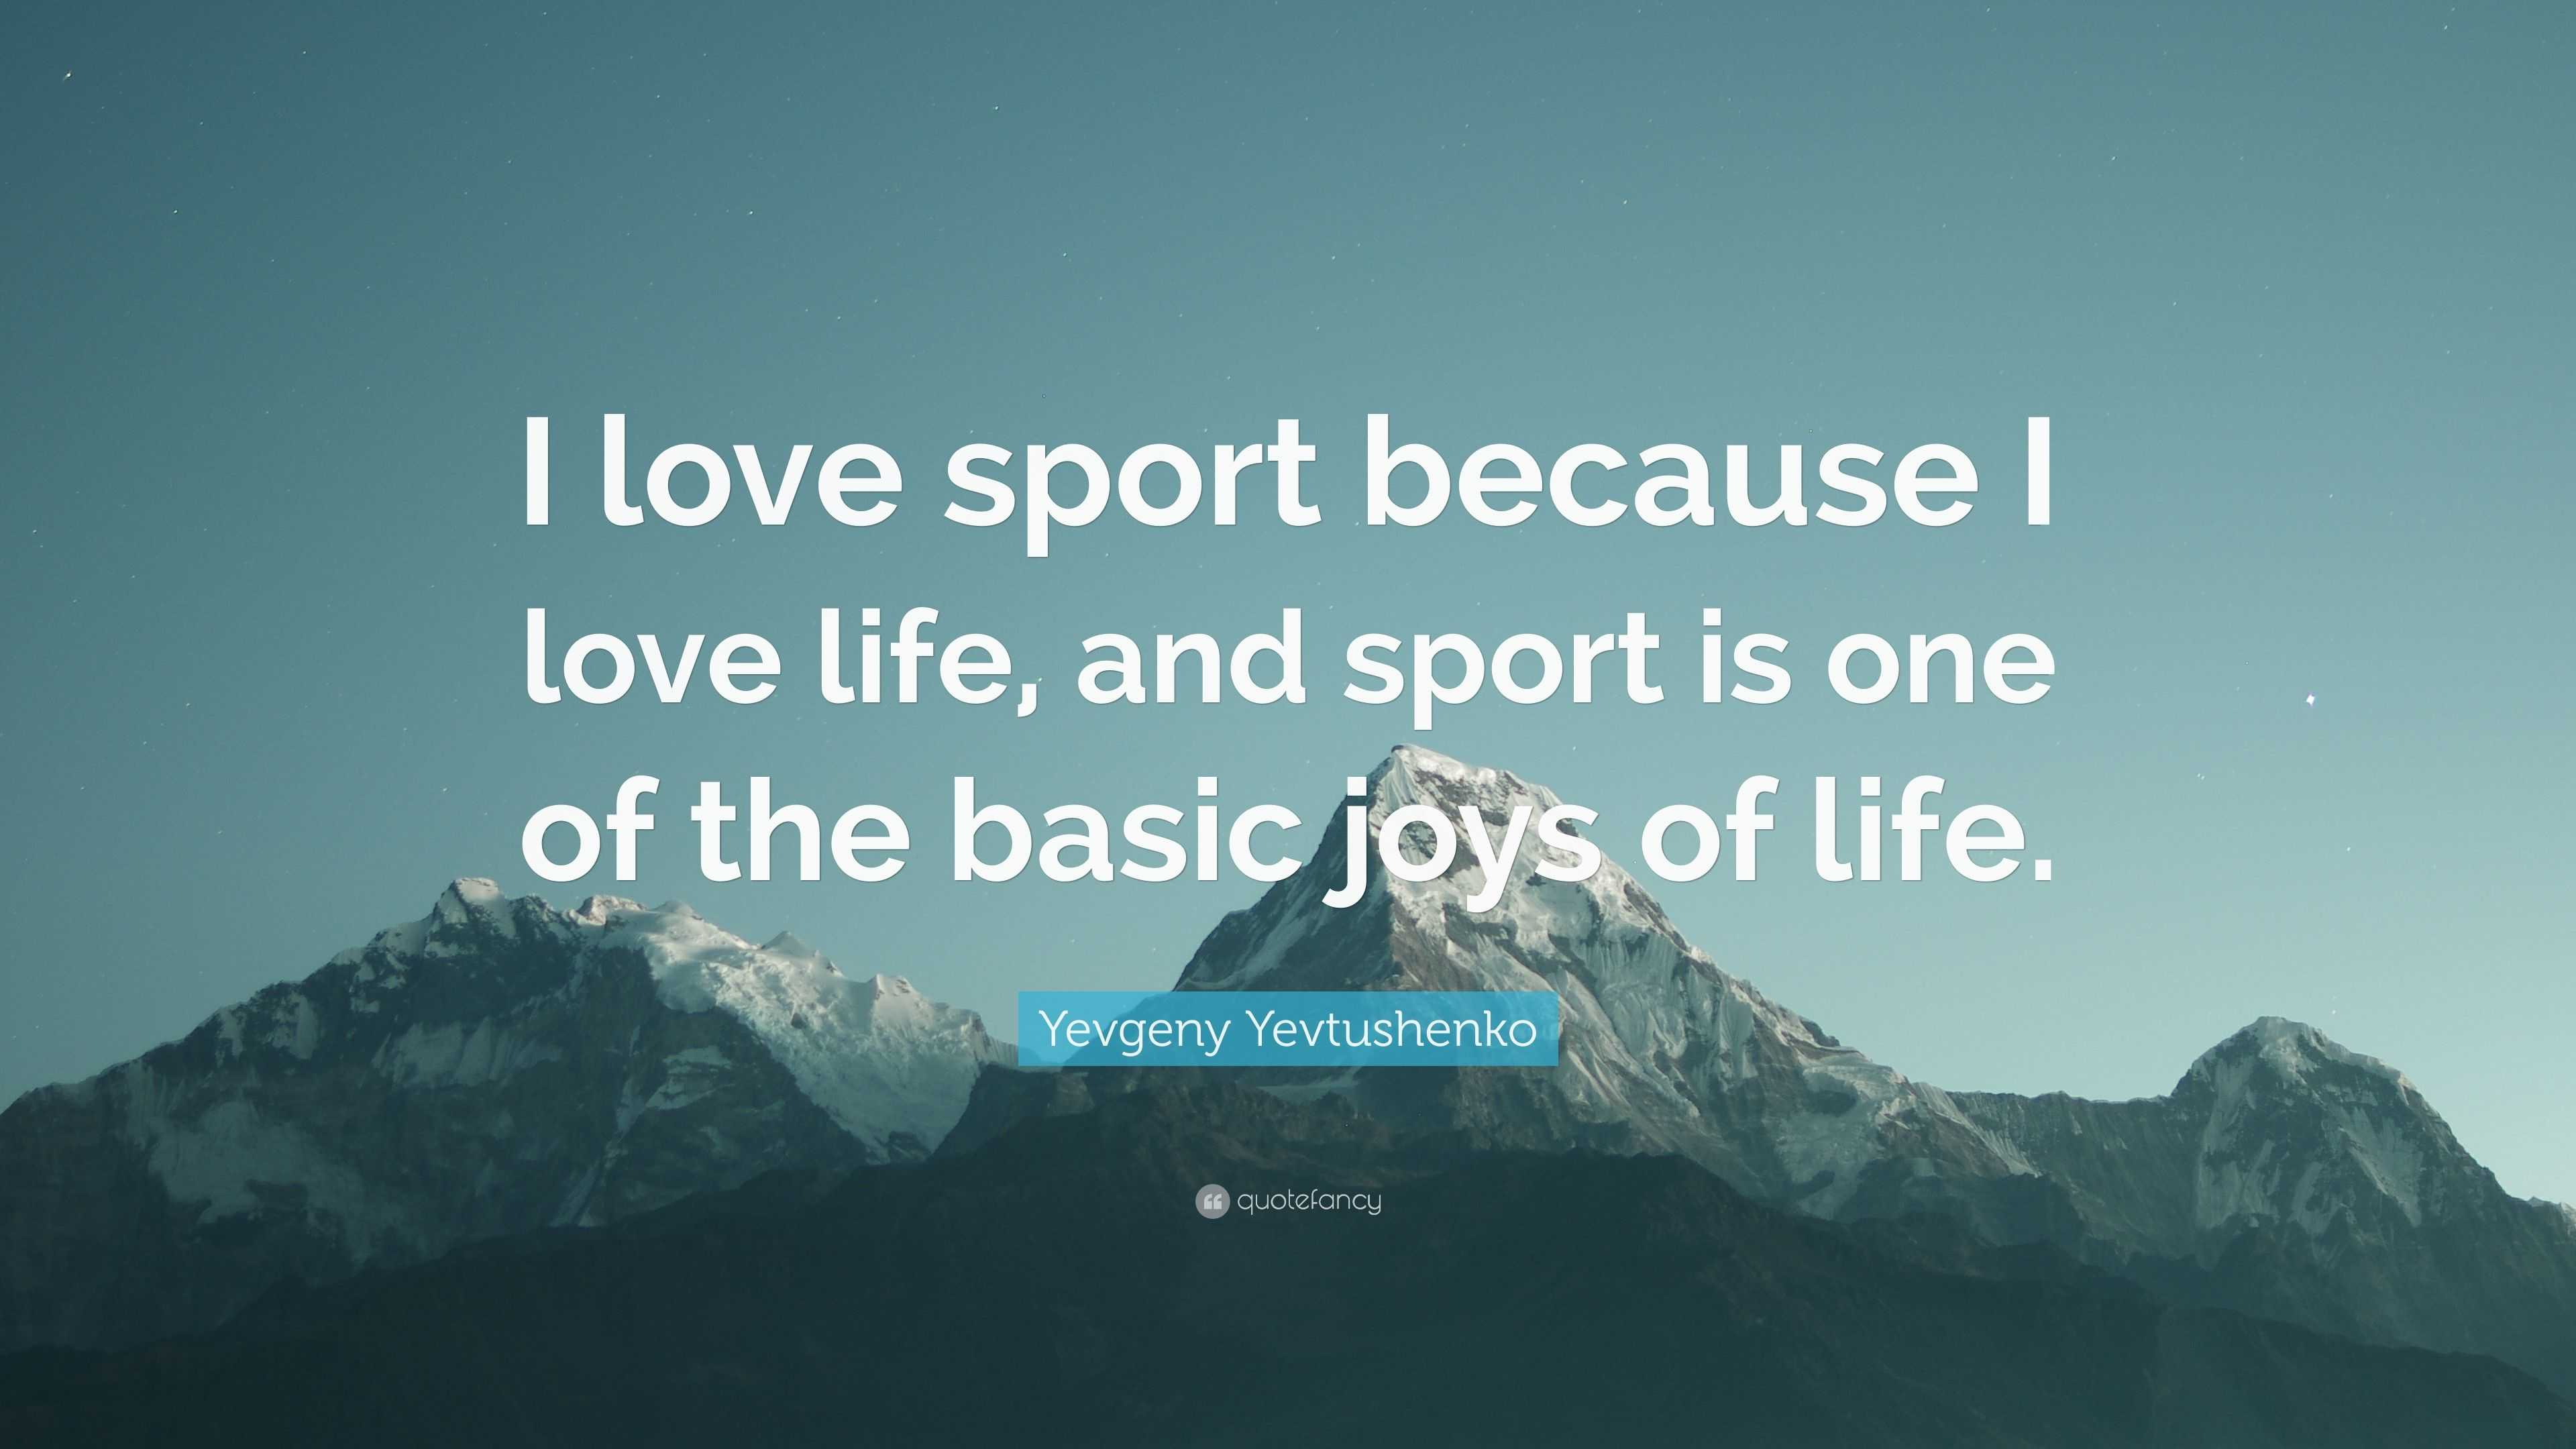 Yevgeny Yevtushenko Quote: “I love sport because I love life, and